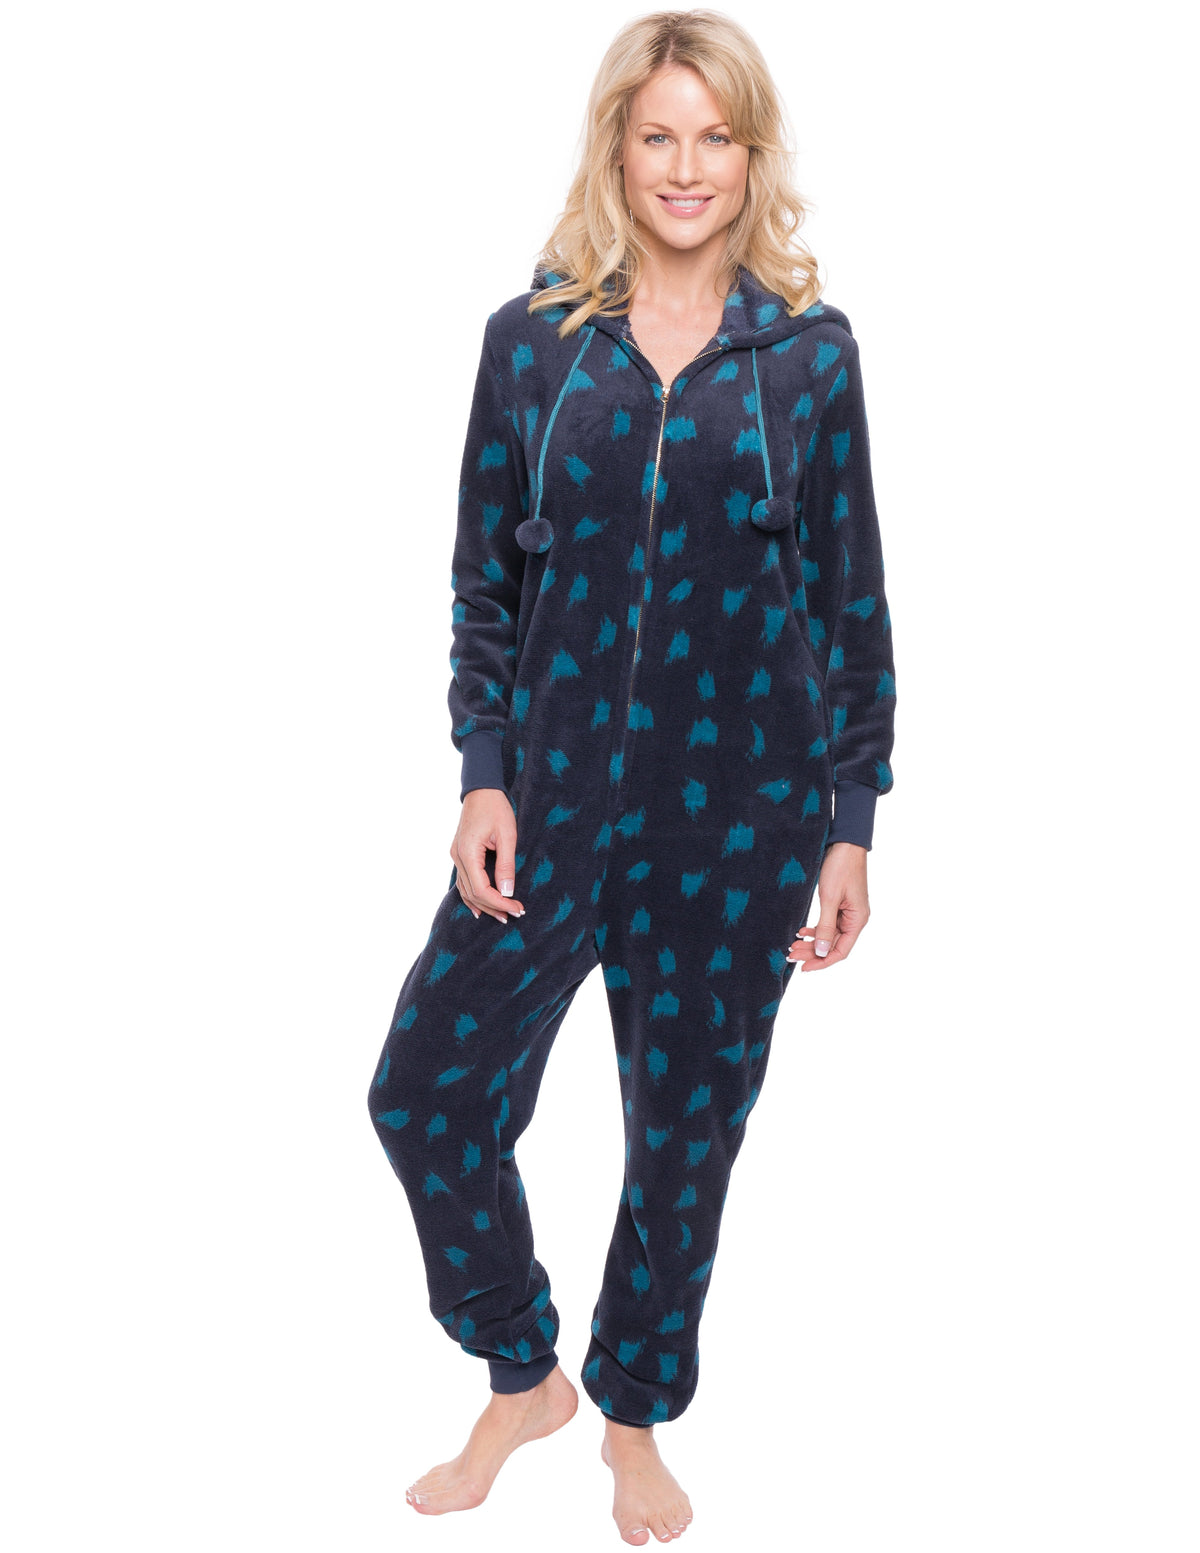 Women's Premium Coral Fleece Plush Hooded Onesie Pajama - Snow Leopard - Navy/Teal